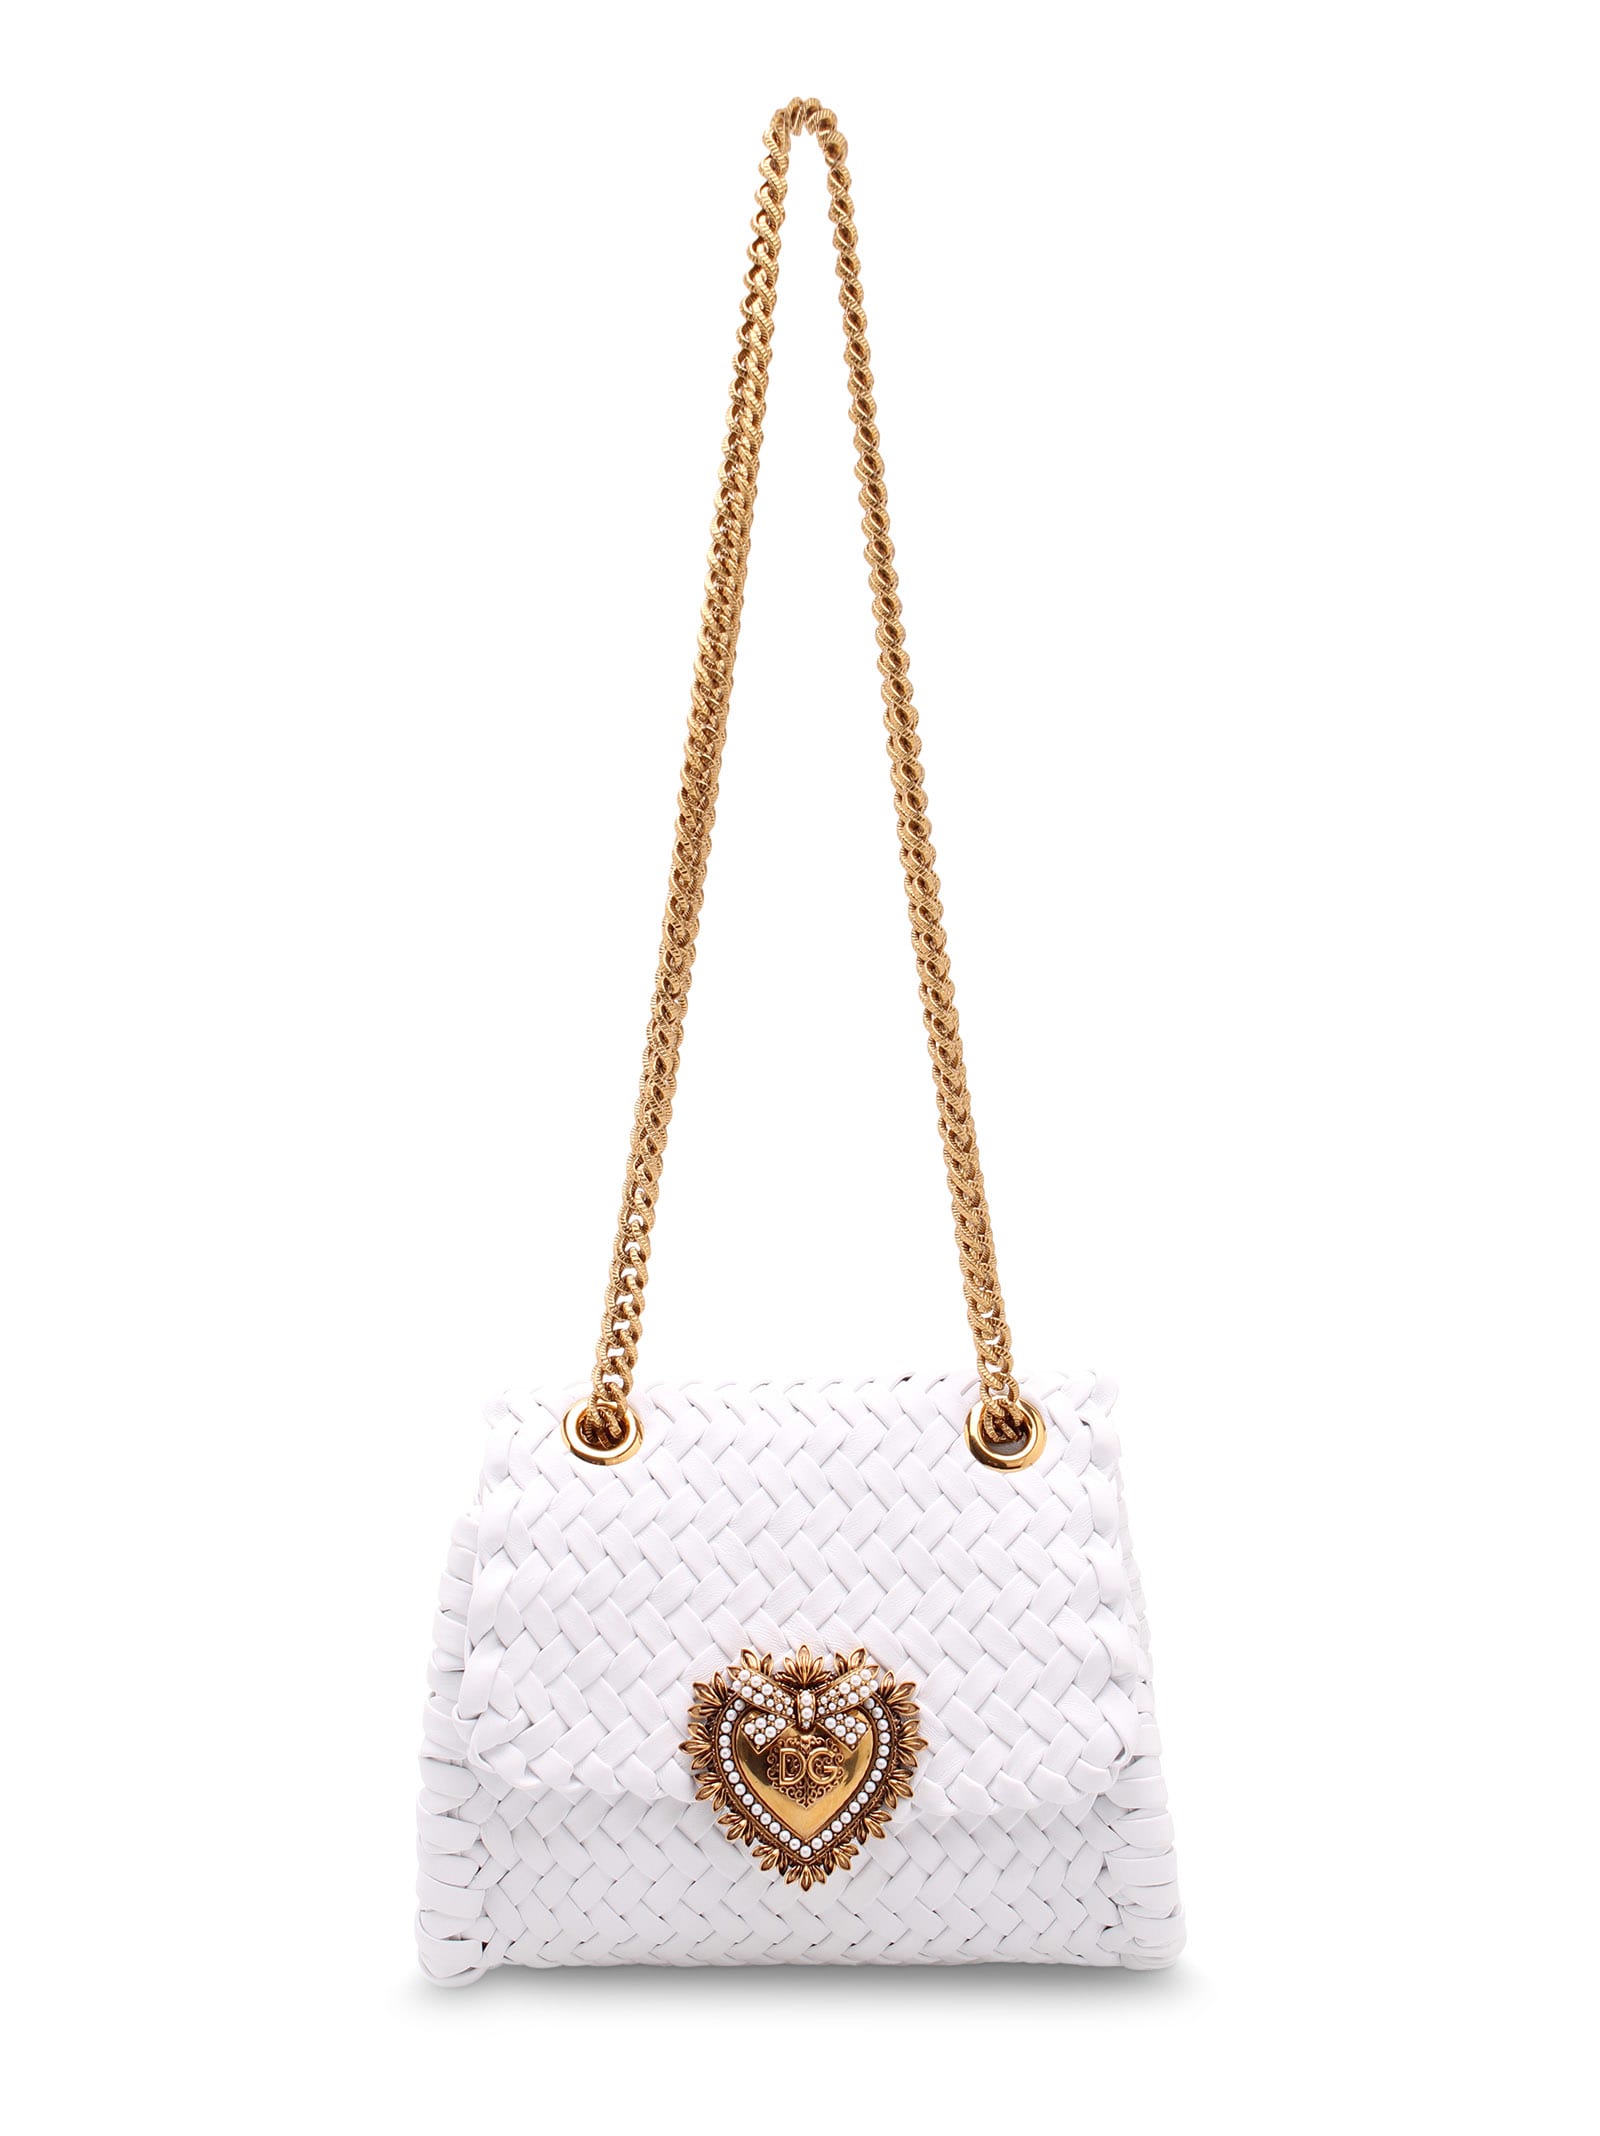 Dolce & Gabbana Devotion Leather Shoulder Bag In Optical White